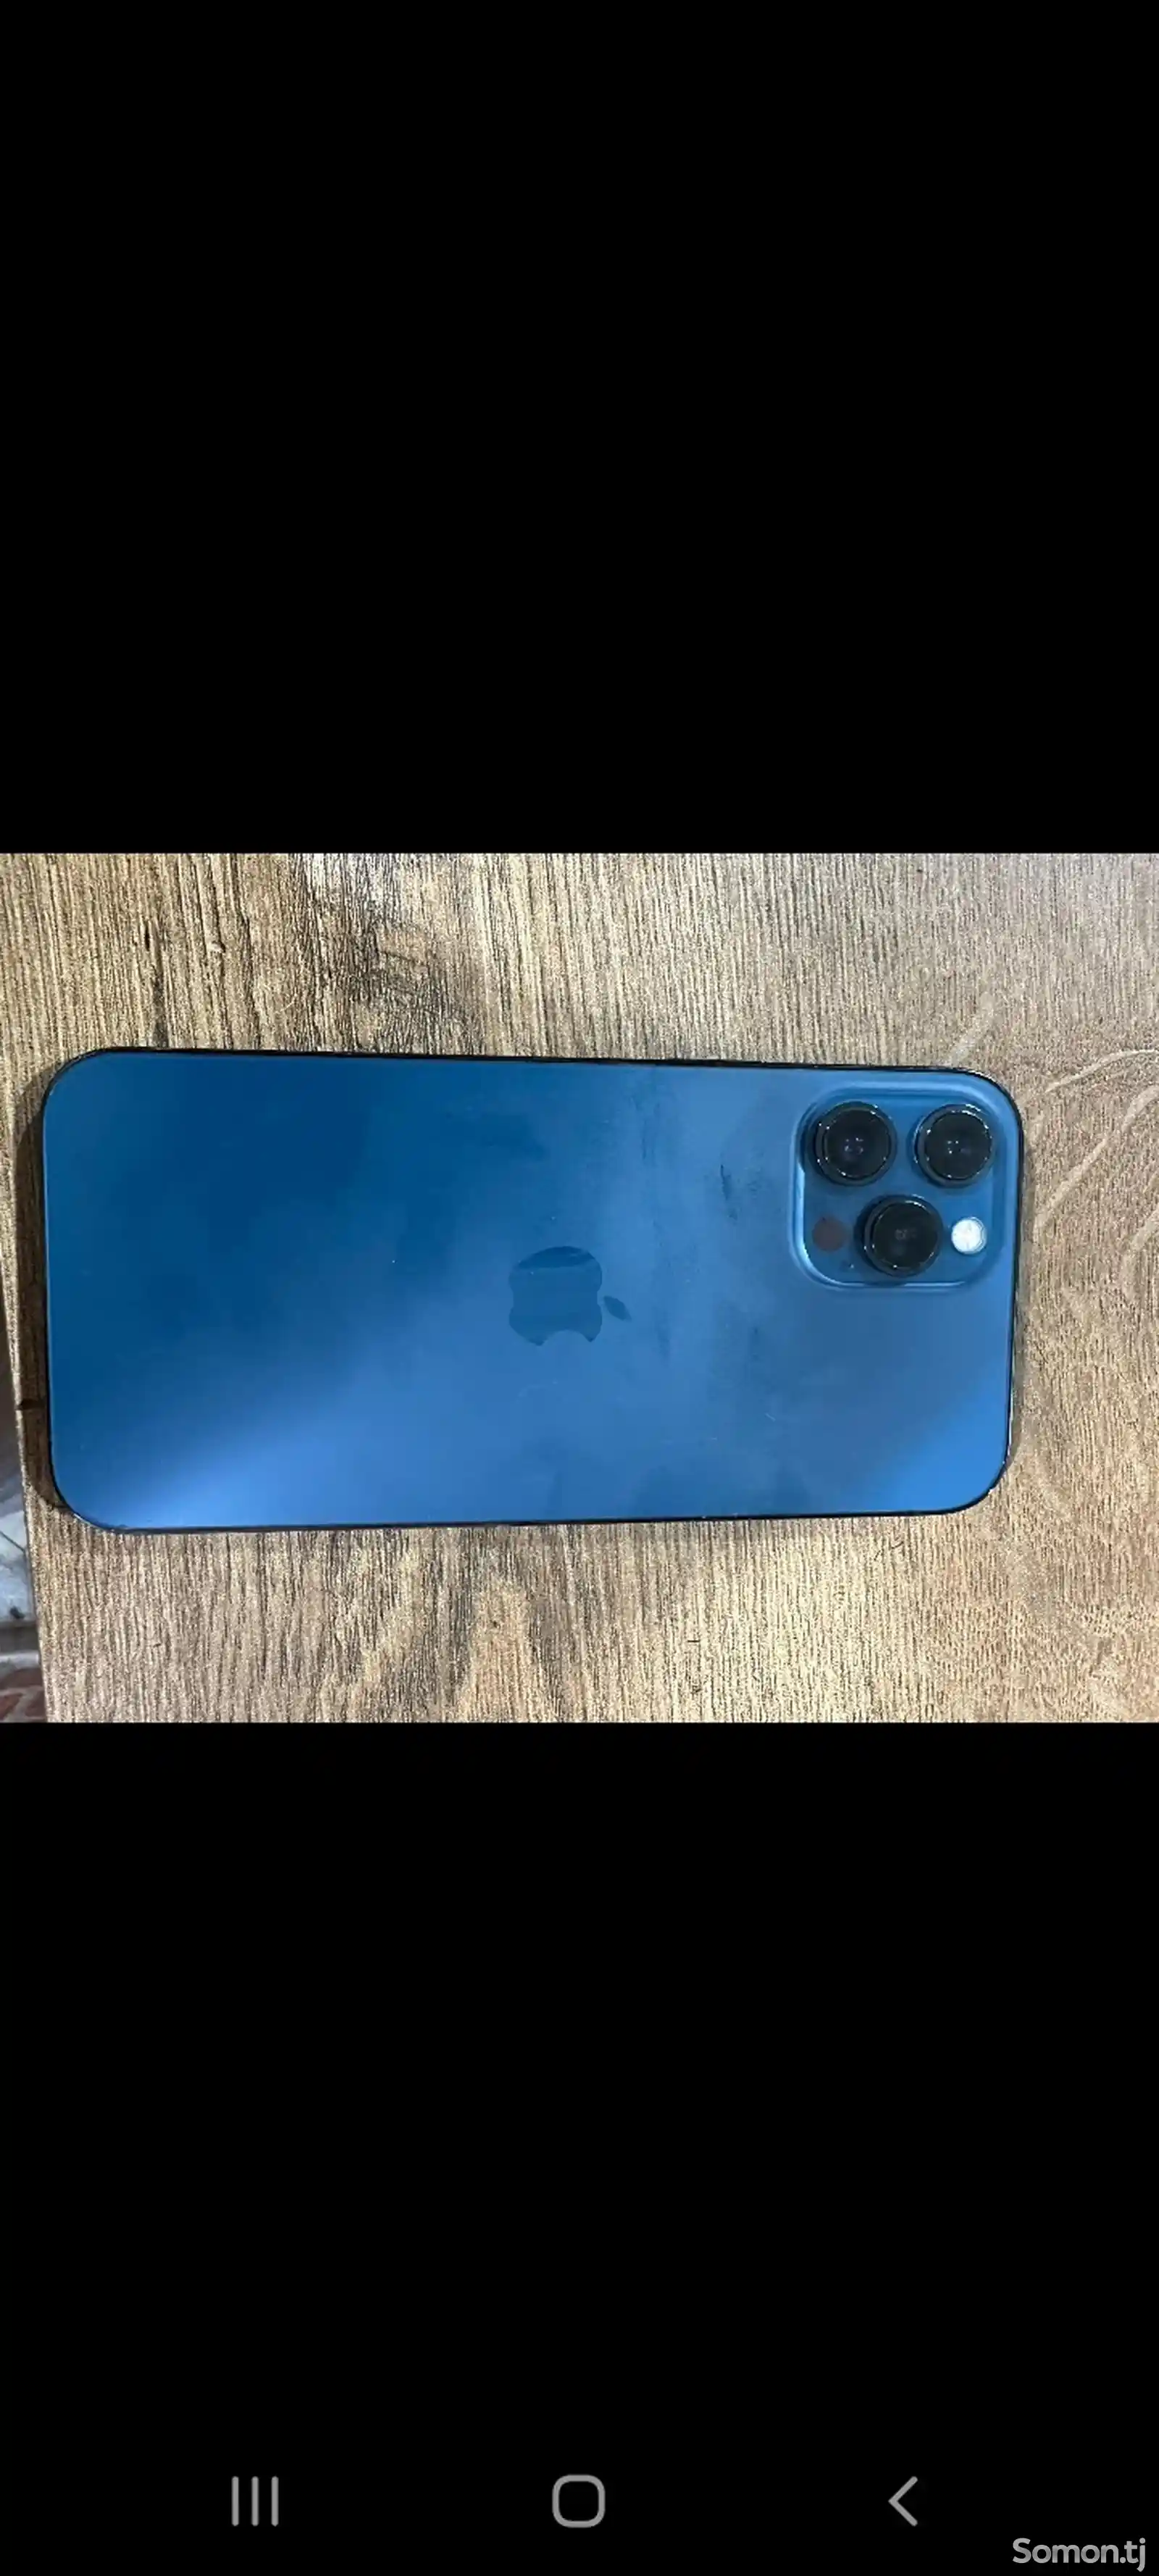 Apple iPhone 12 Pro Max, 256 gb, Pacific Blue-4